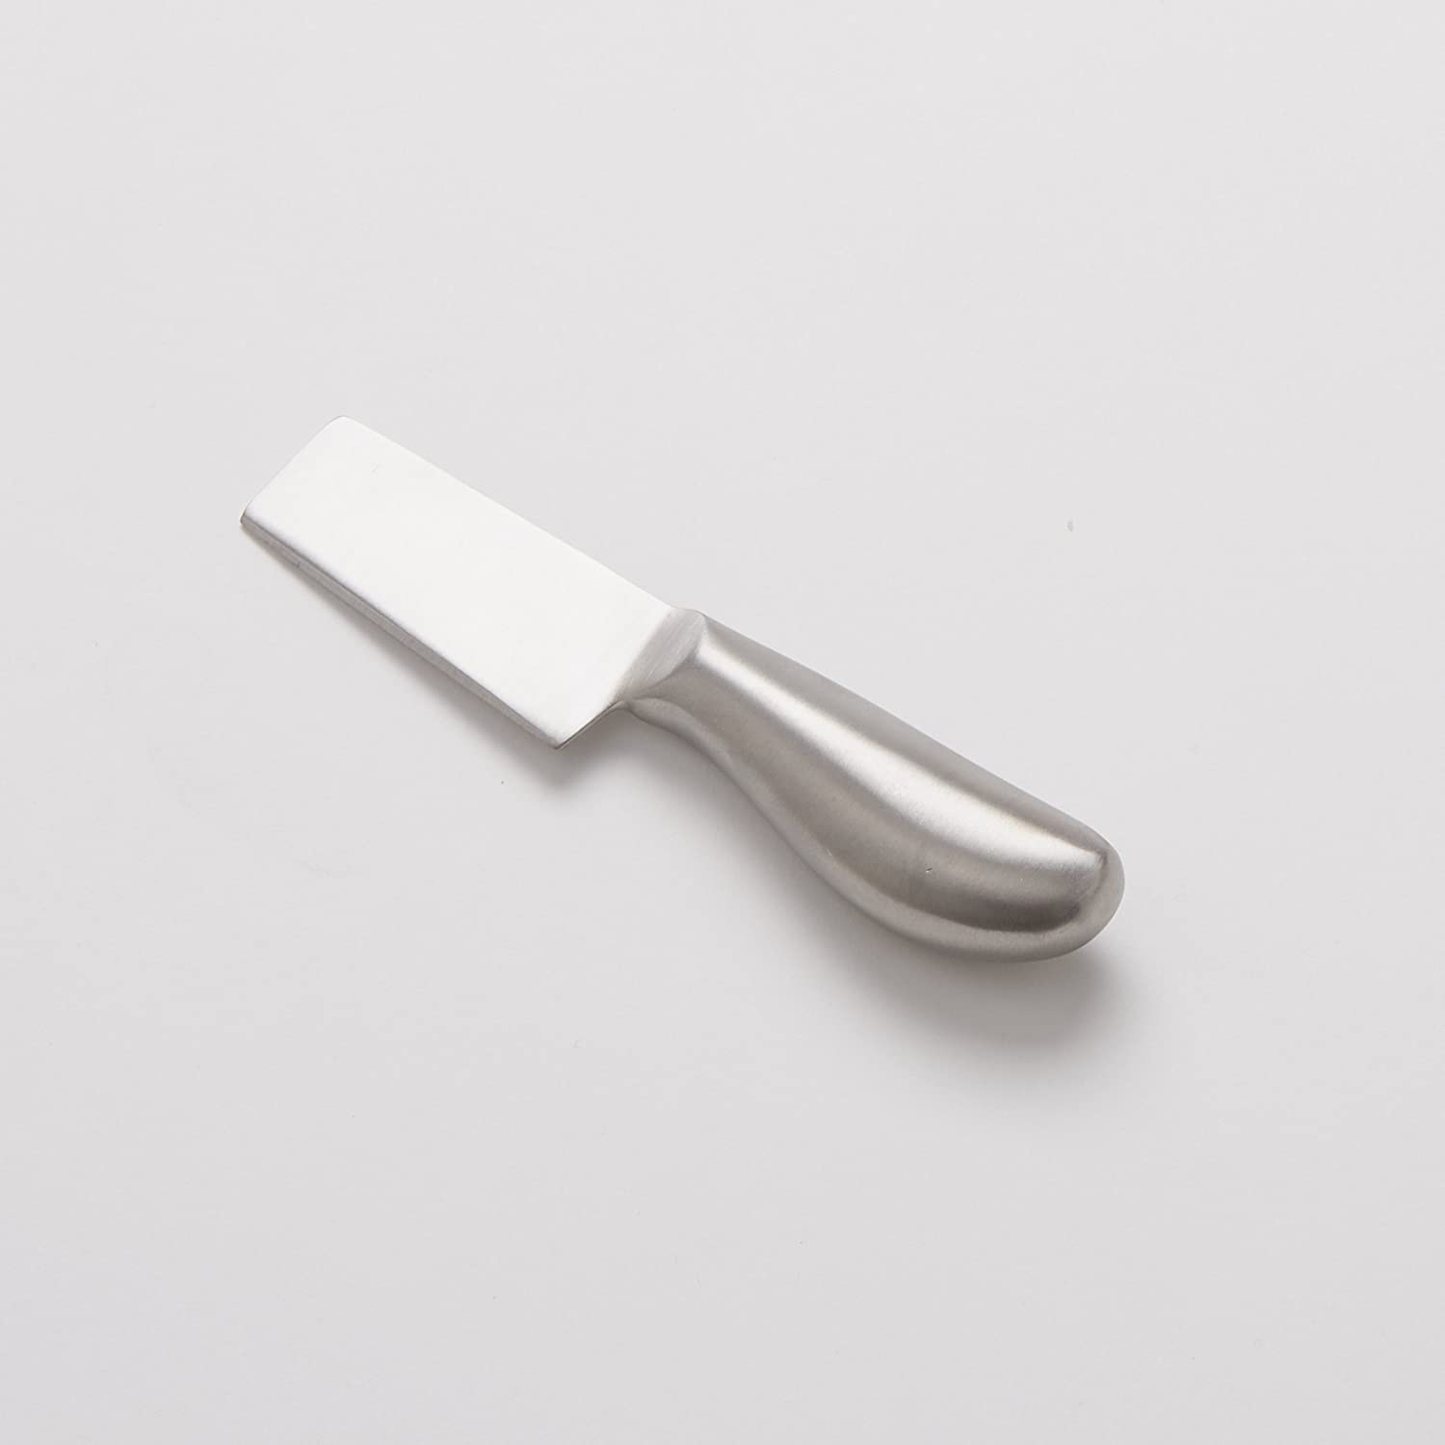 American Metalcraft CKNF4 Hard Evolution Cheese Knives, Stainless Steel, Sleem, 5-1/4" Length